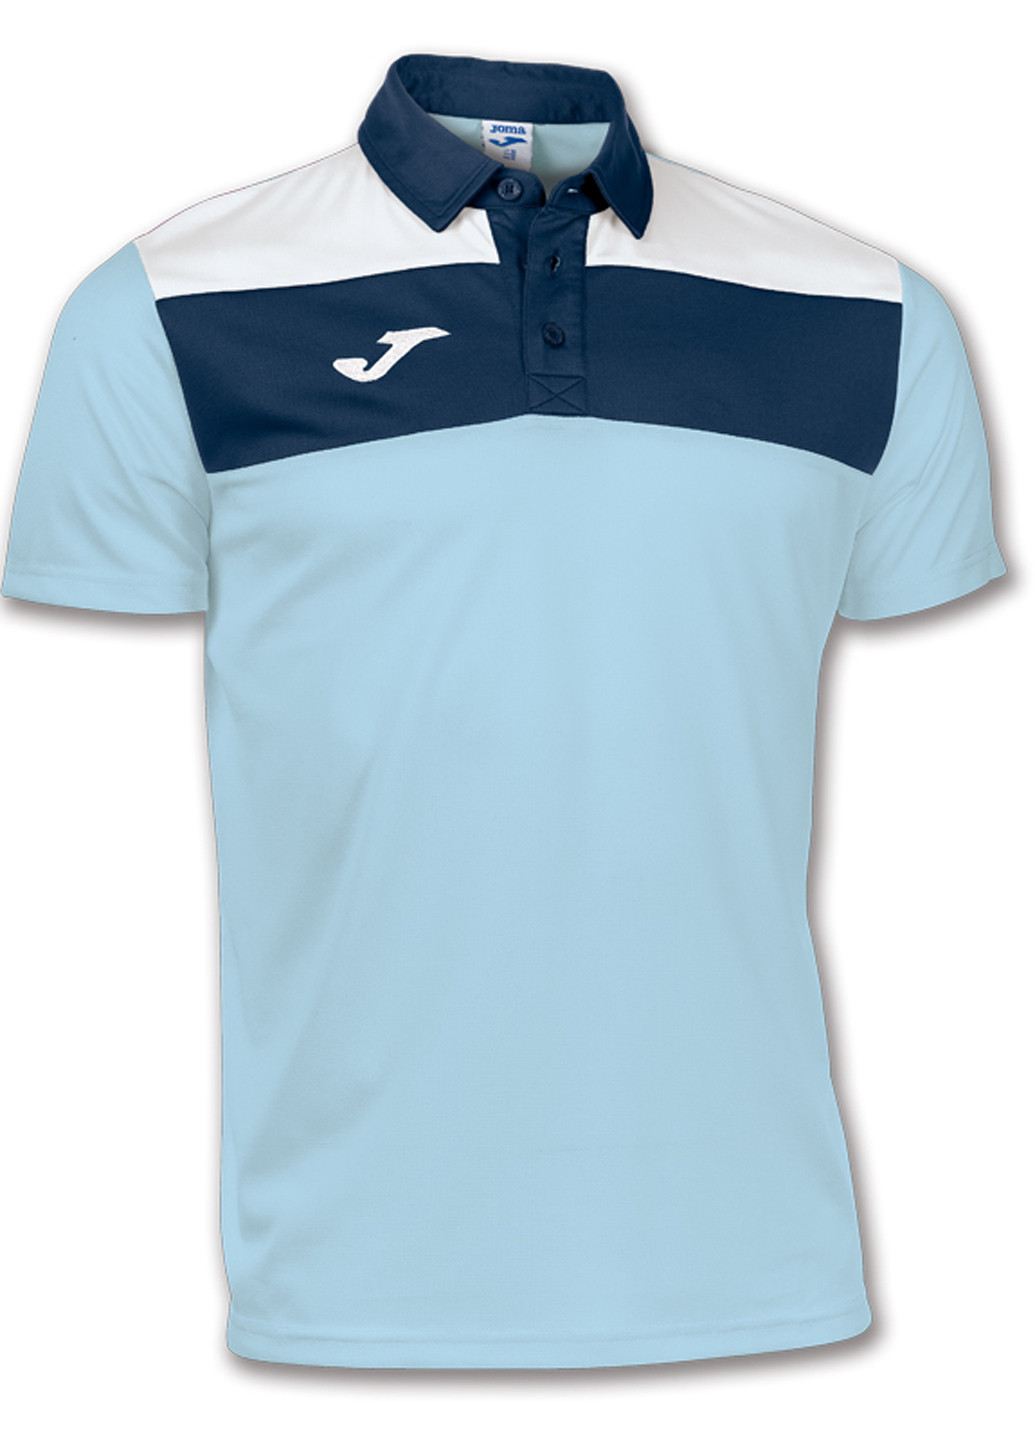 Небесно-голубой футболка-поло для мужчин Joma с логотипом